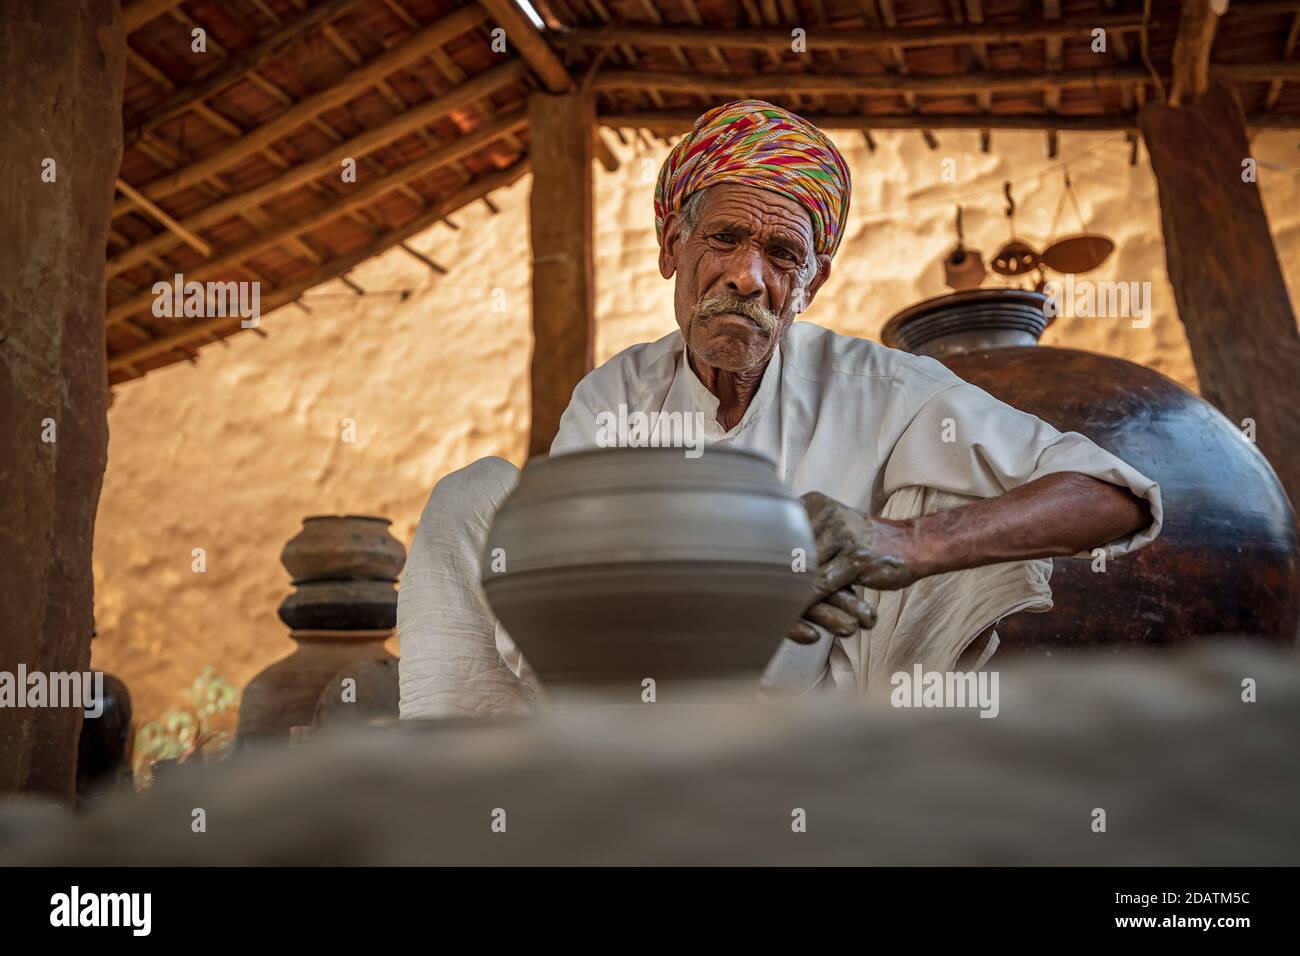 Potter at work makes ceramic dishes. India, Rajasthan. Stock Photo